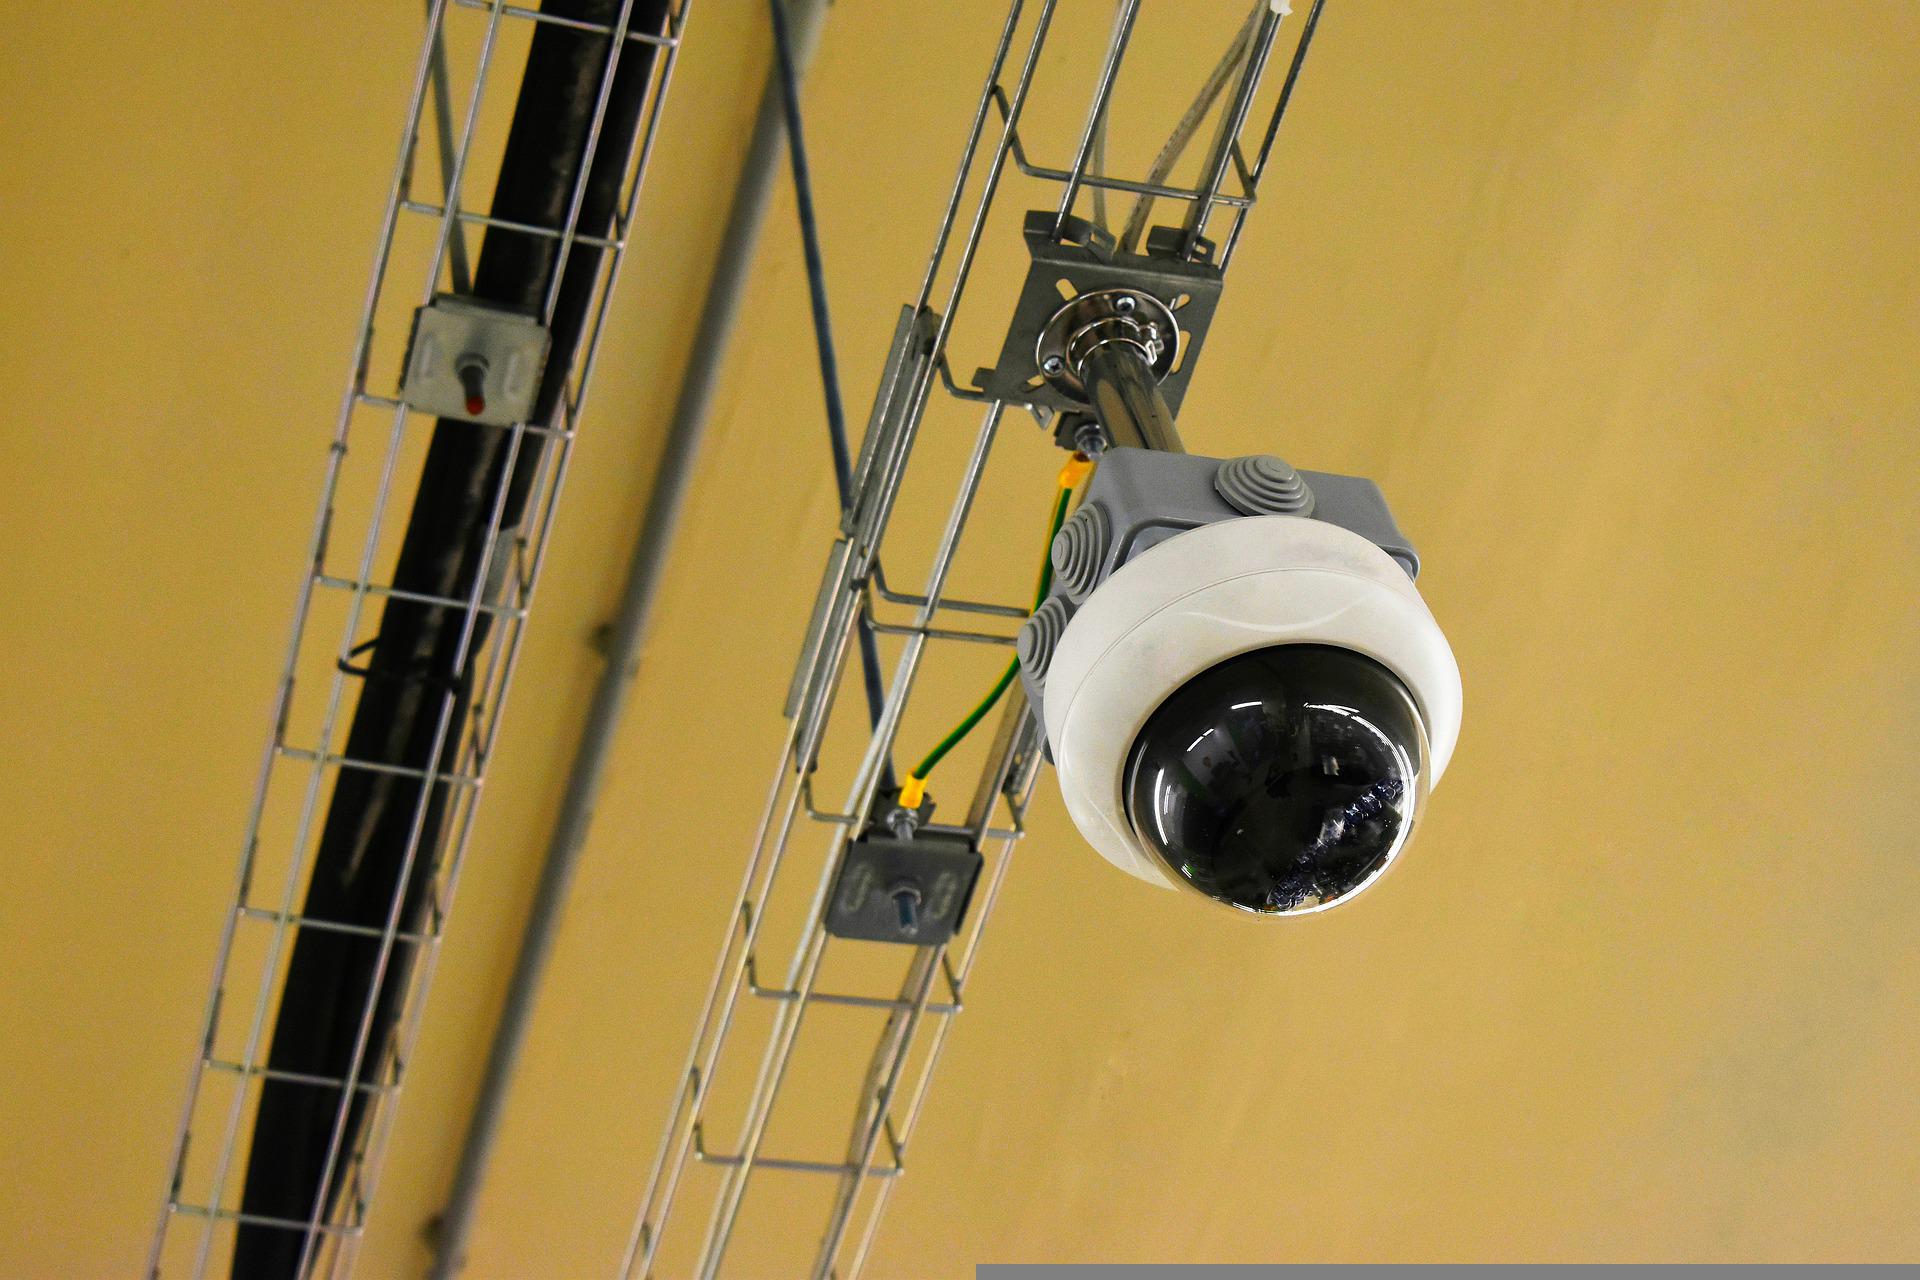 ILUSTRASI: Pria pamer kemaluan masuk kafe terekam CCTV. (Pixabay)